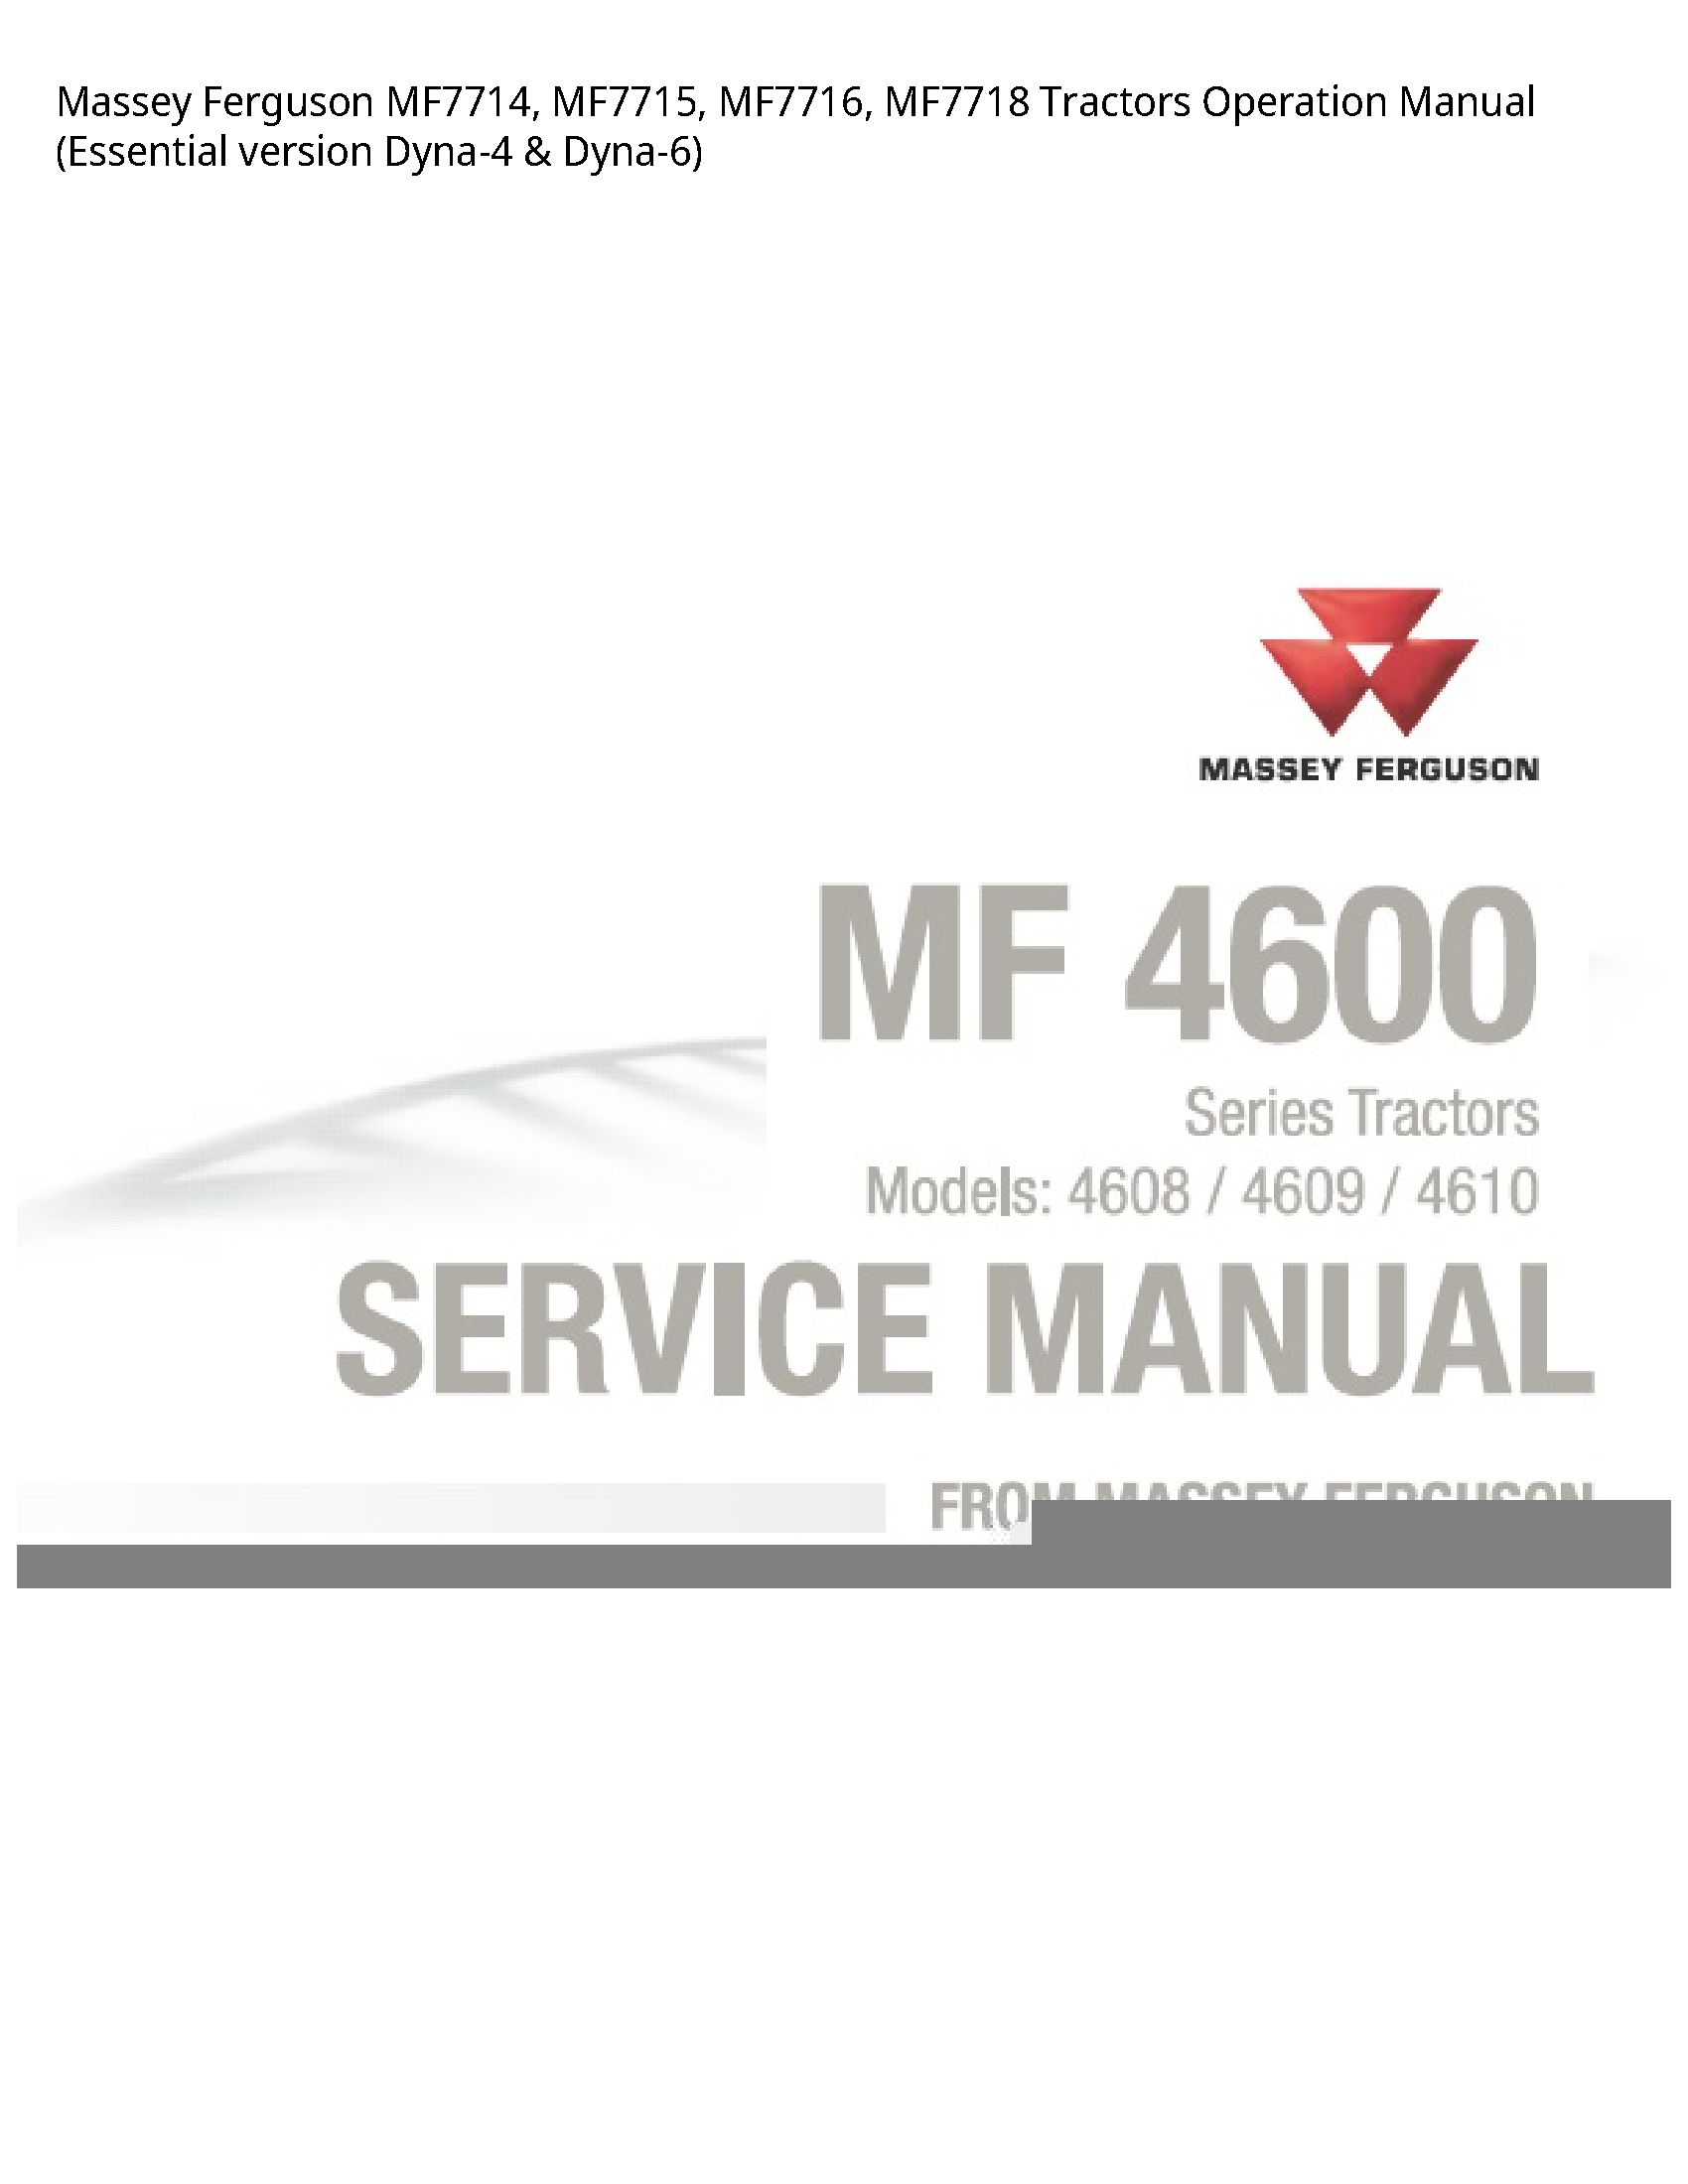 Massey Ferguson MF7714 Tractors Operation manual